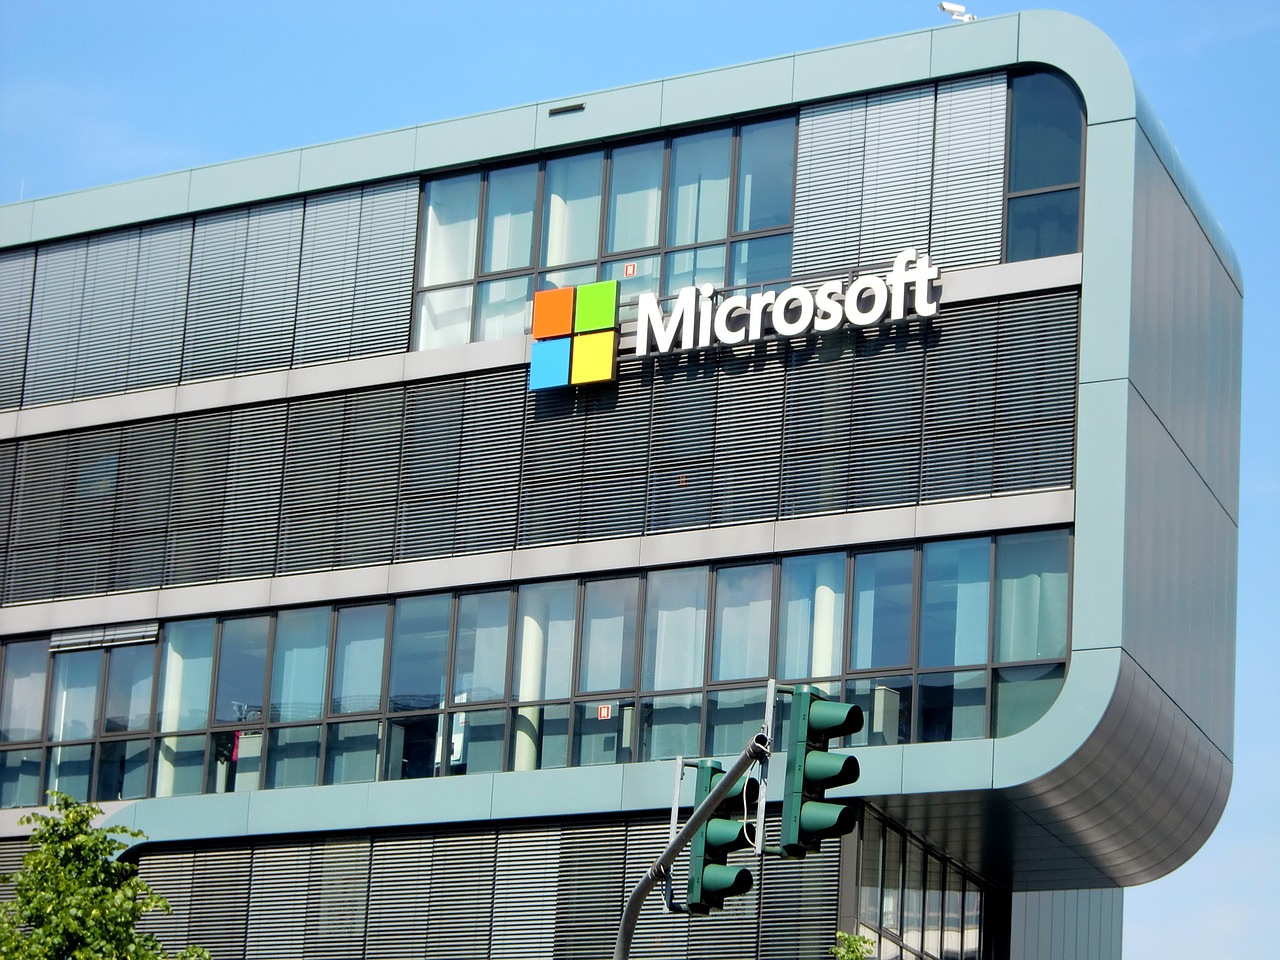 Microsoft hit with antitrust violation warning in EU over bundling of Groups